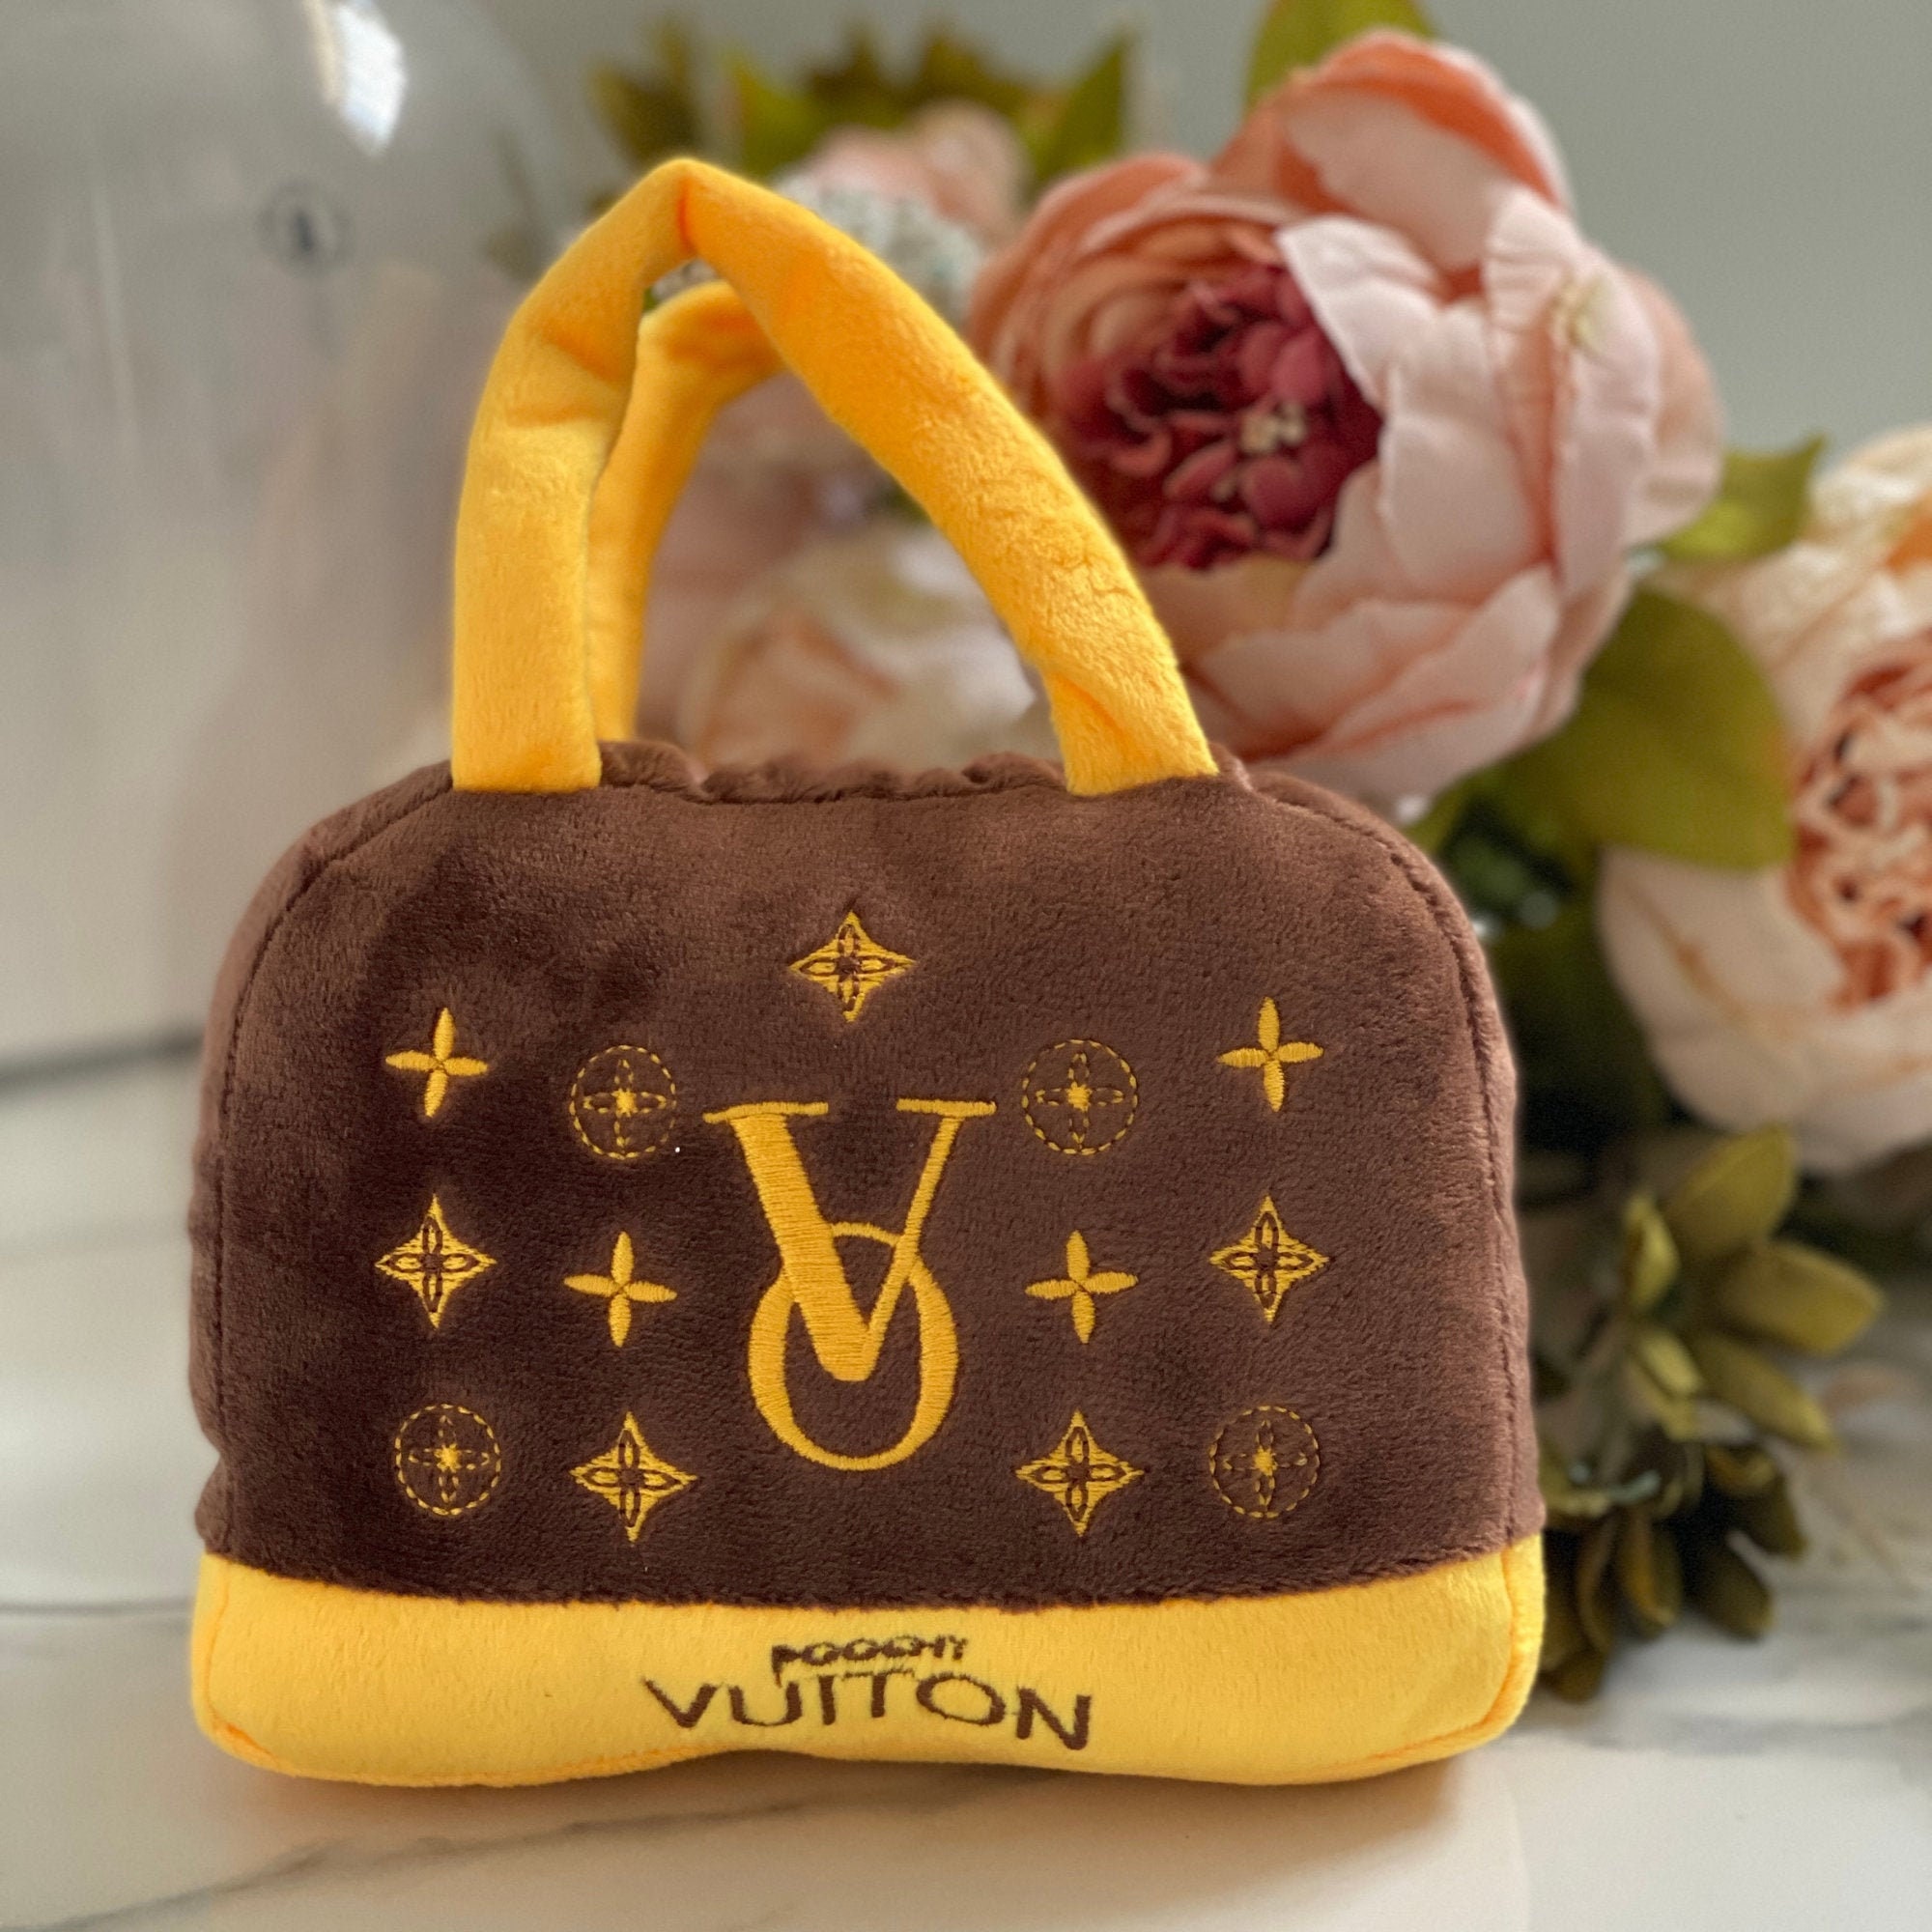 6 designer pet accessories for autumn, from Louis Vuitton's